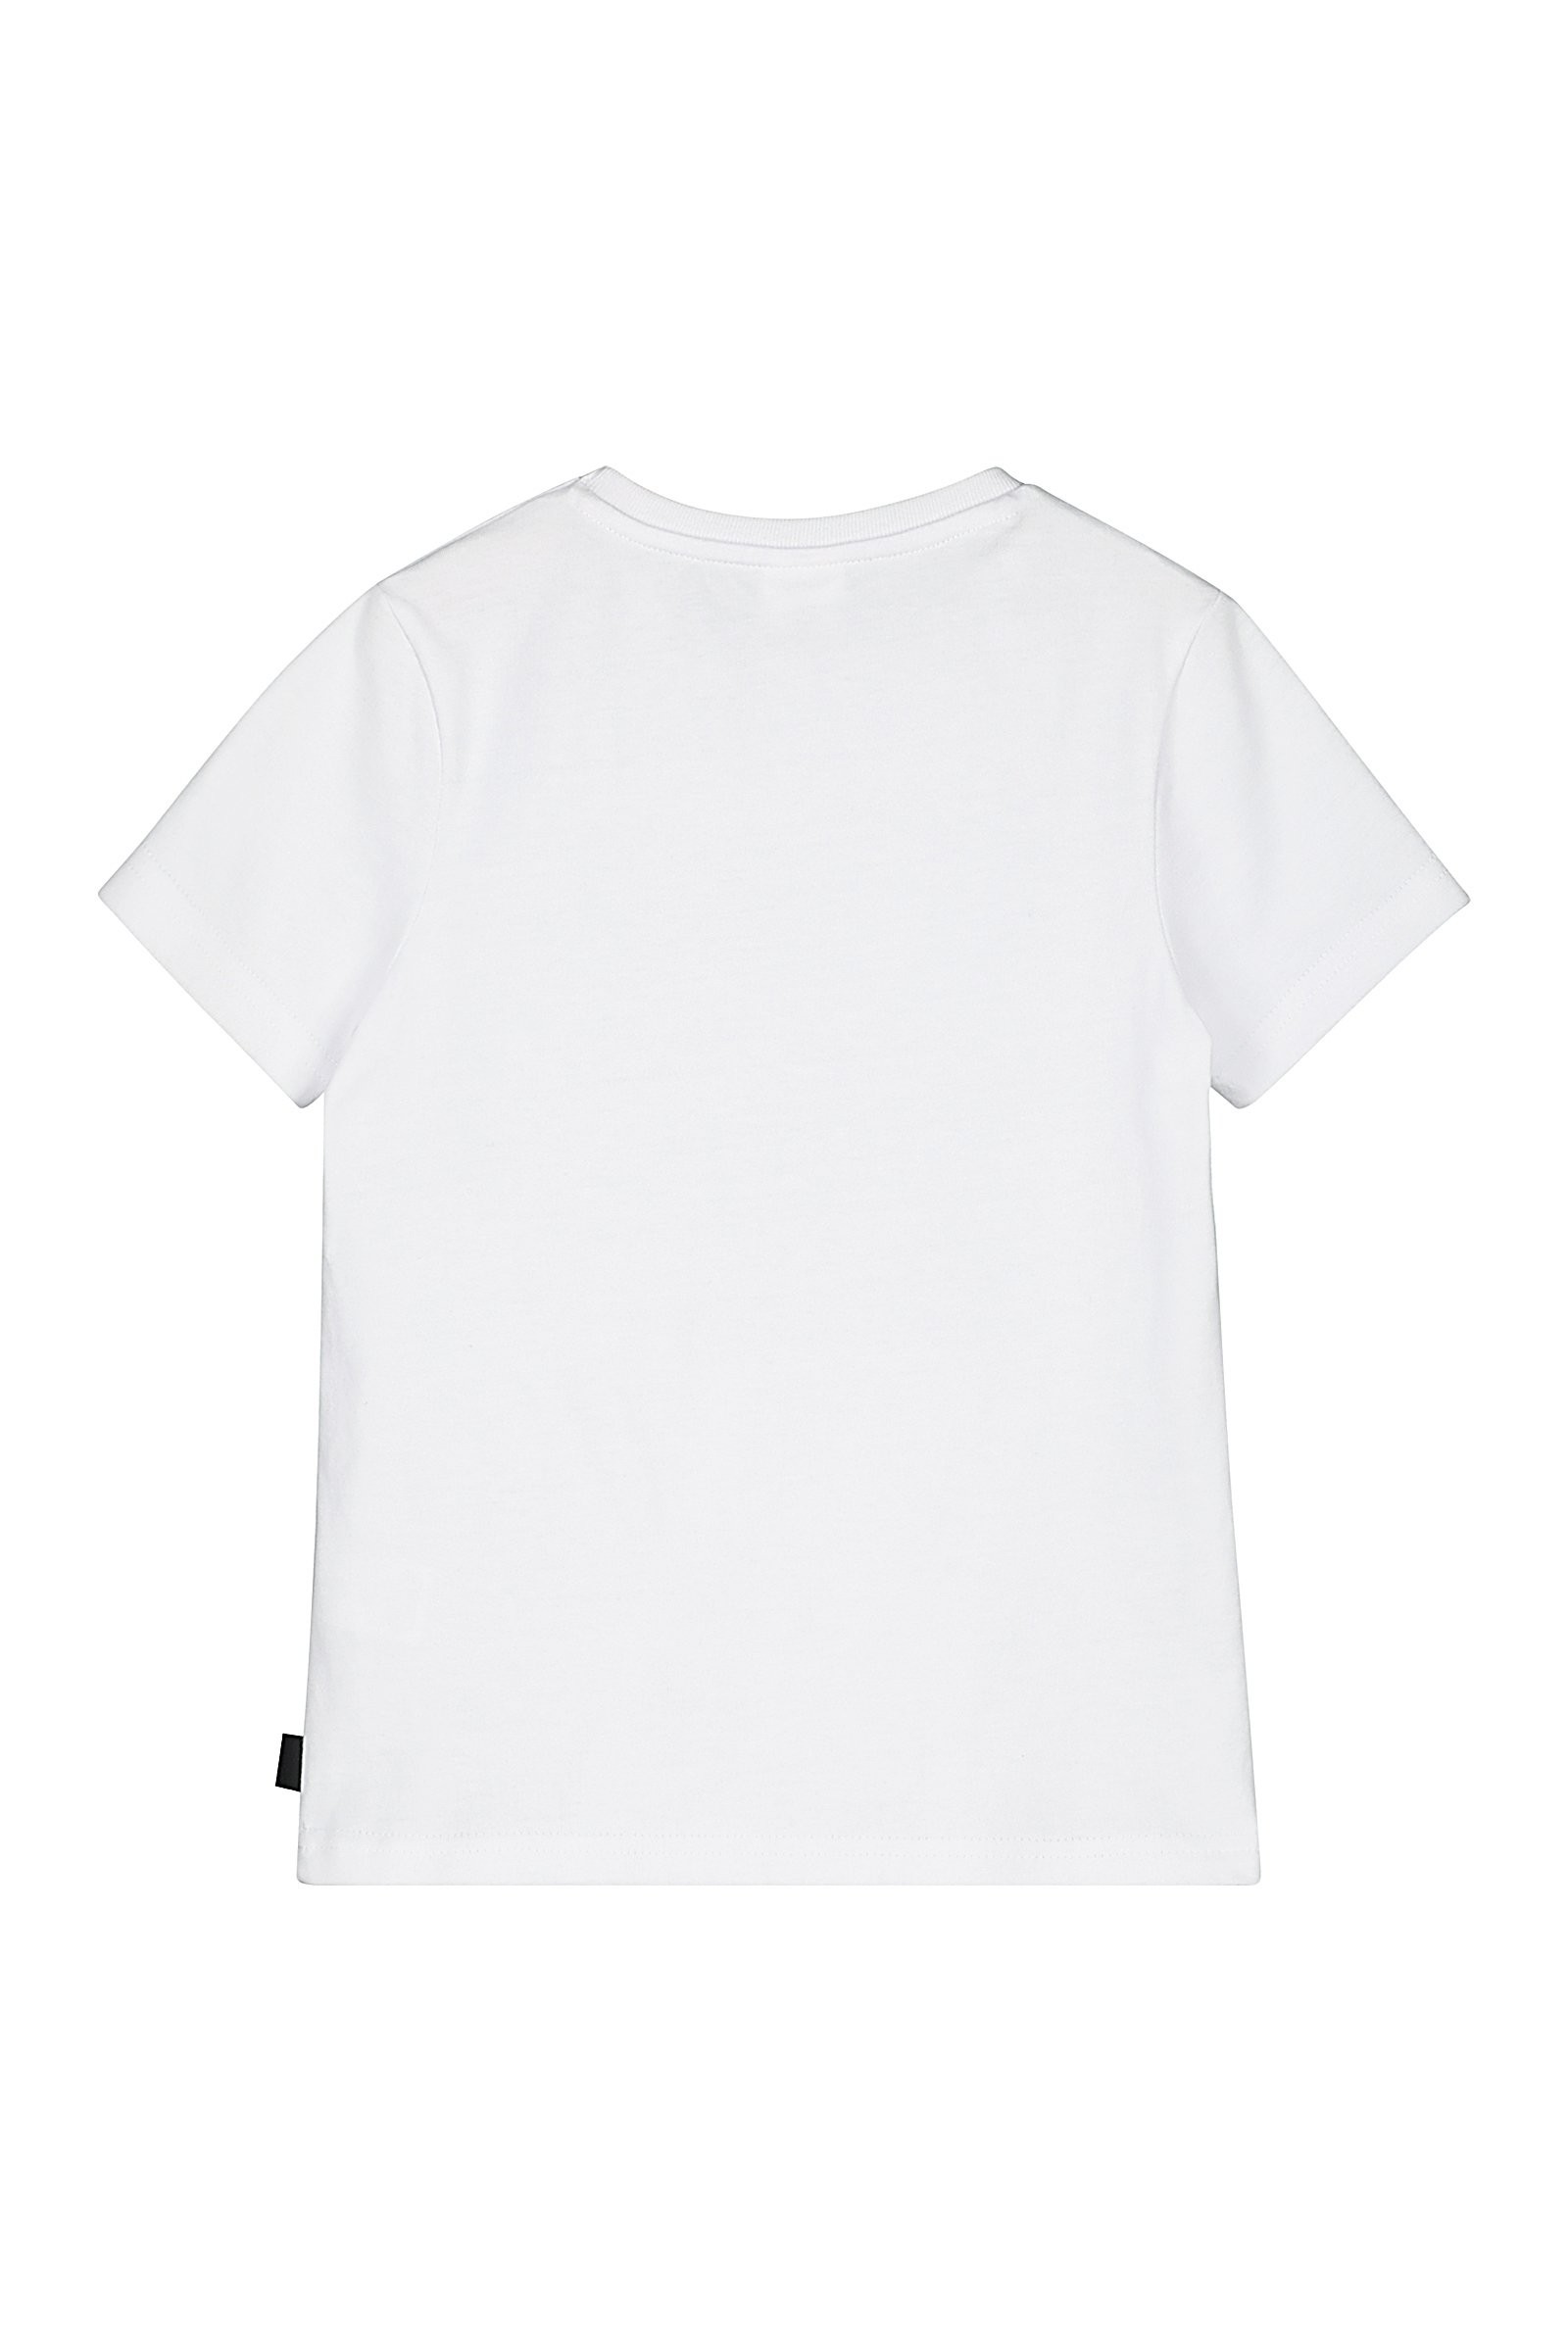 CKS Kids - YIGGE - T-Shirt Kurzarm - Weiß